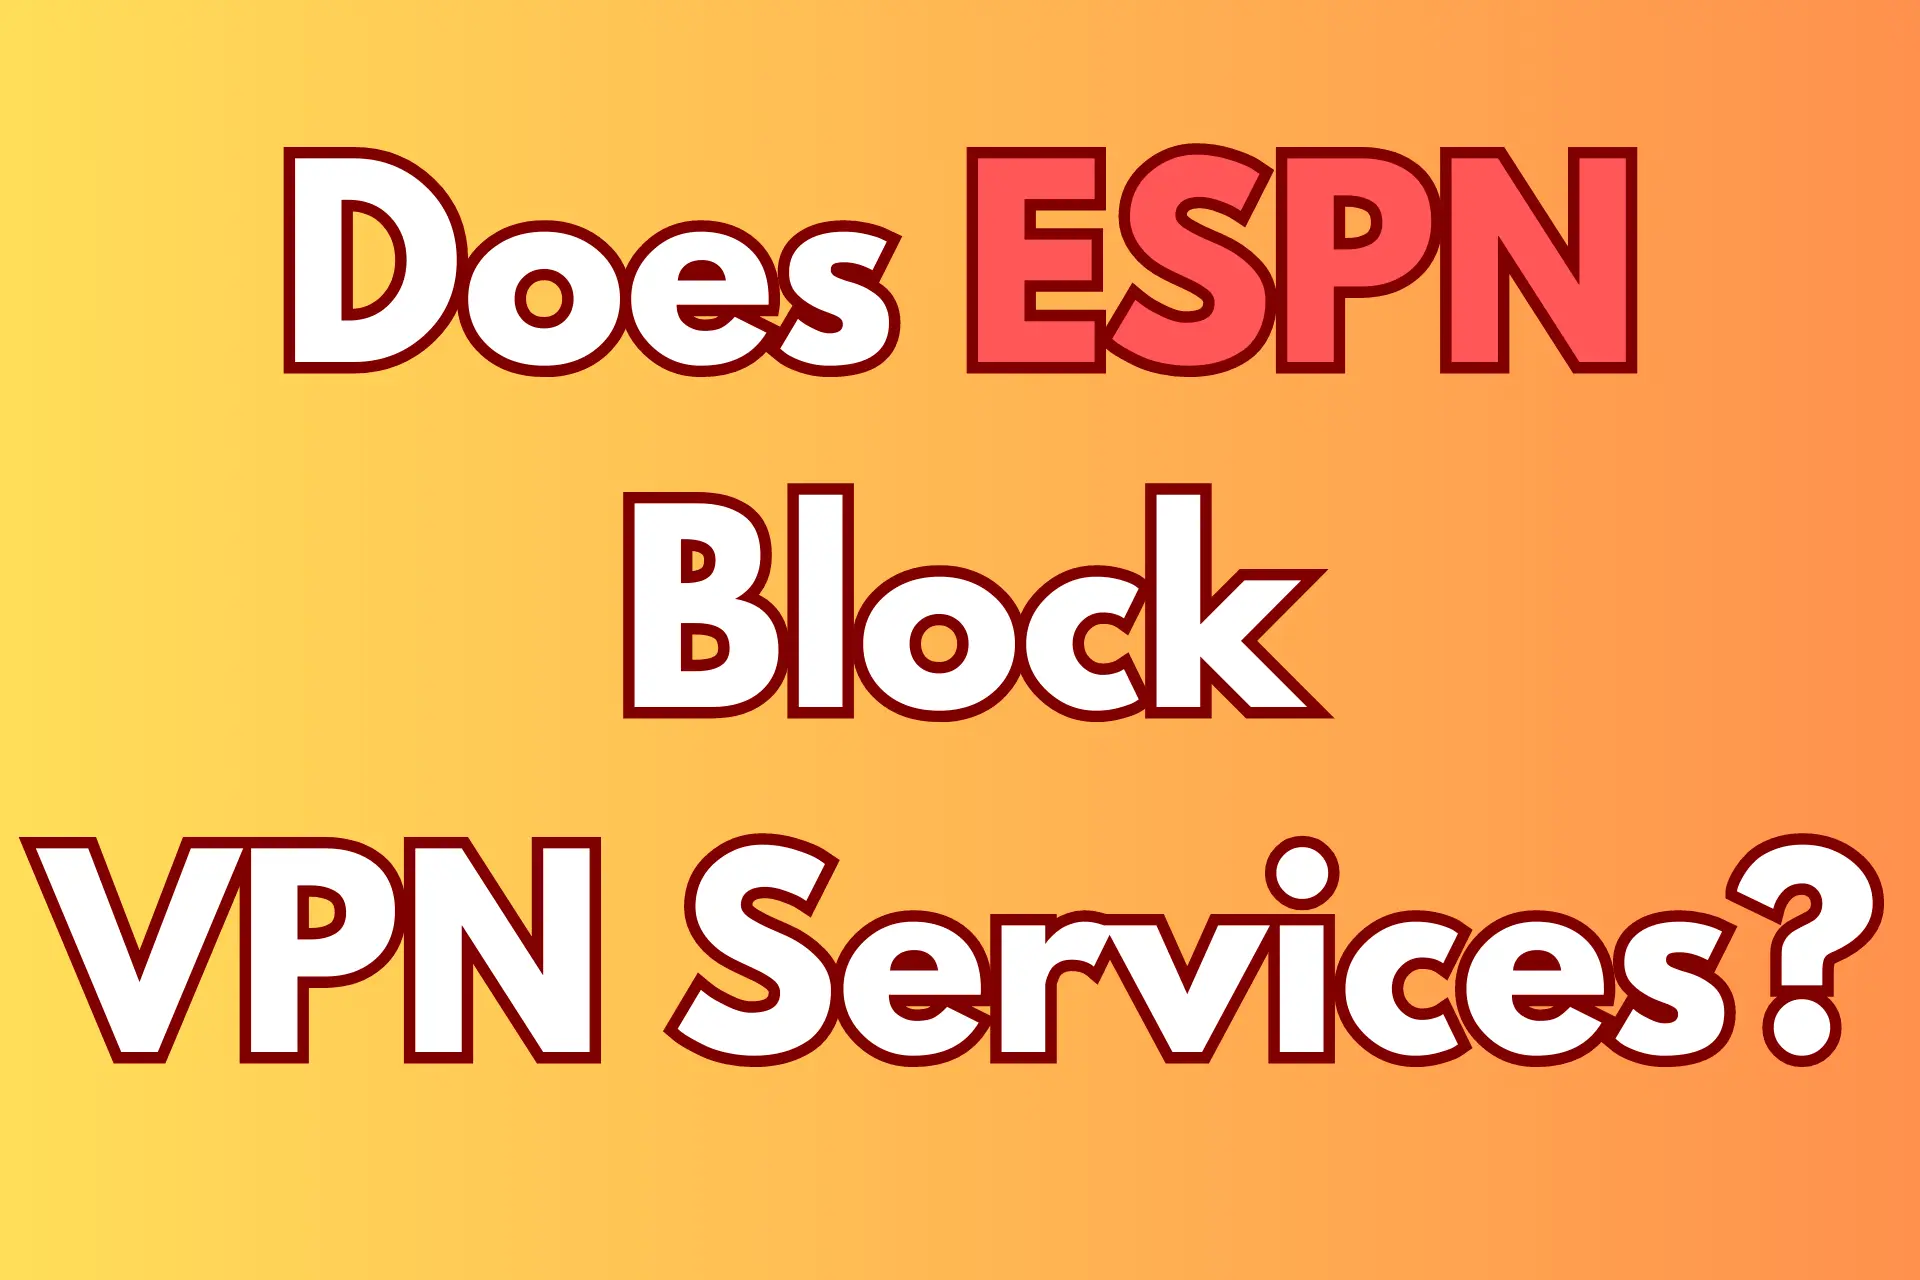 Does ESPN block VPN services?